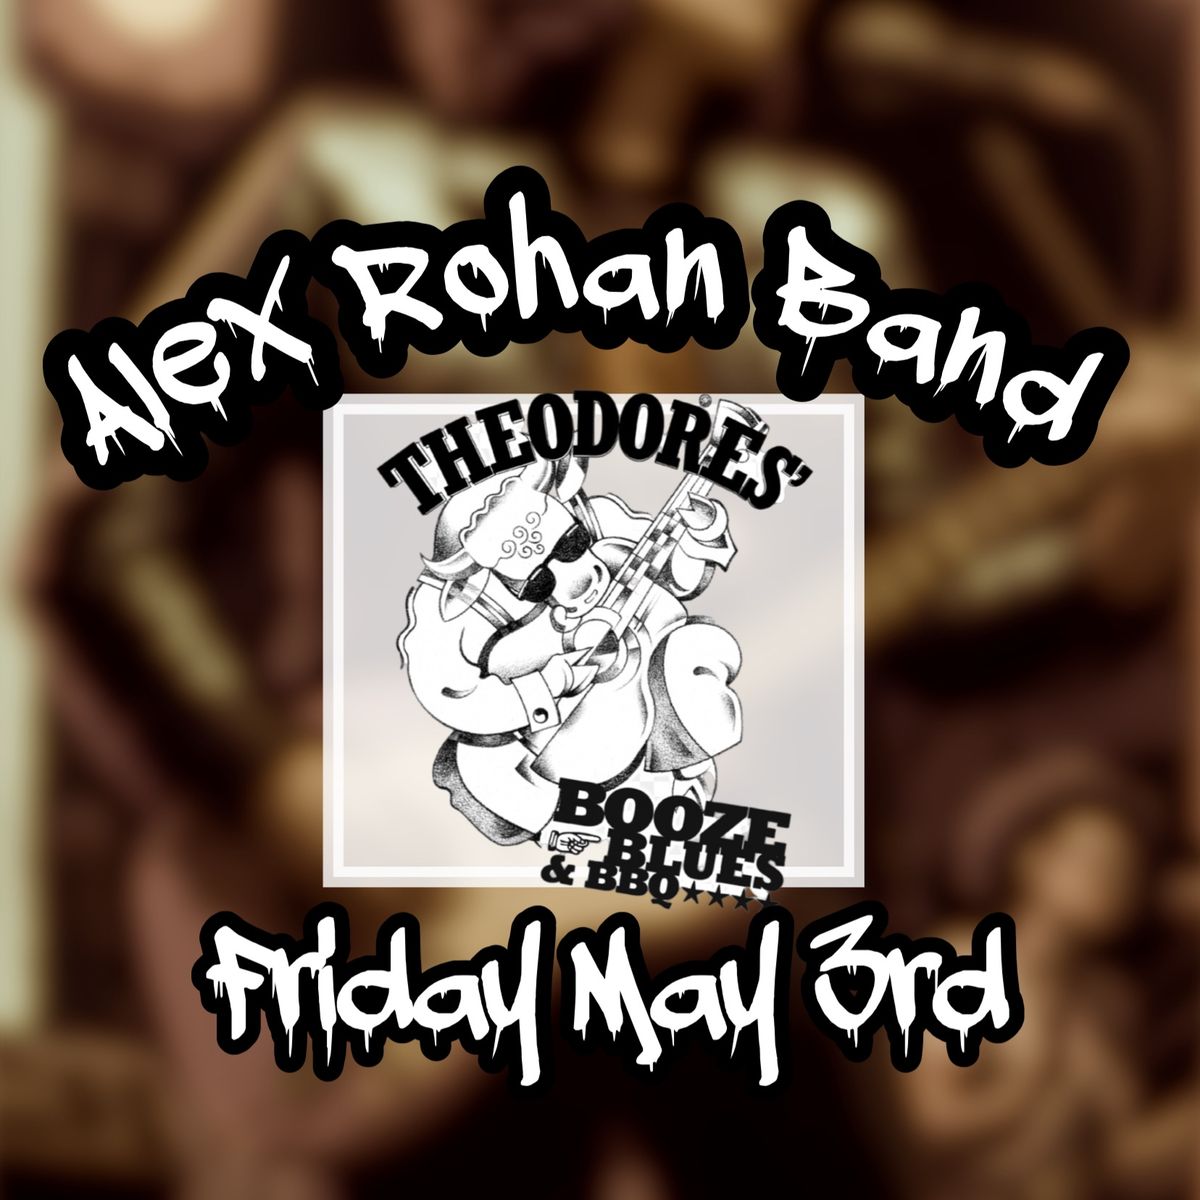 Alex Rohan Band @ Theodores\u2019 Booze, Blues, & BBQ 